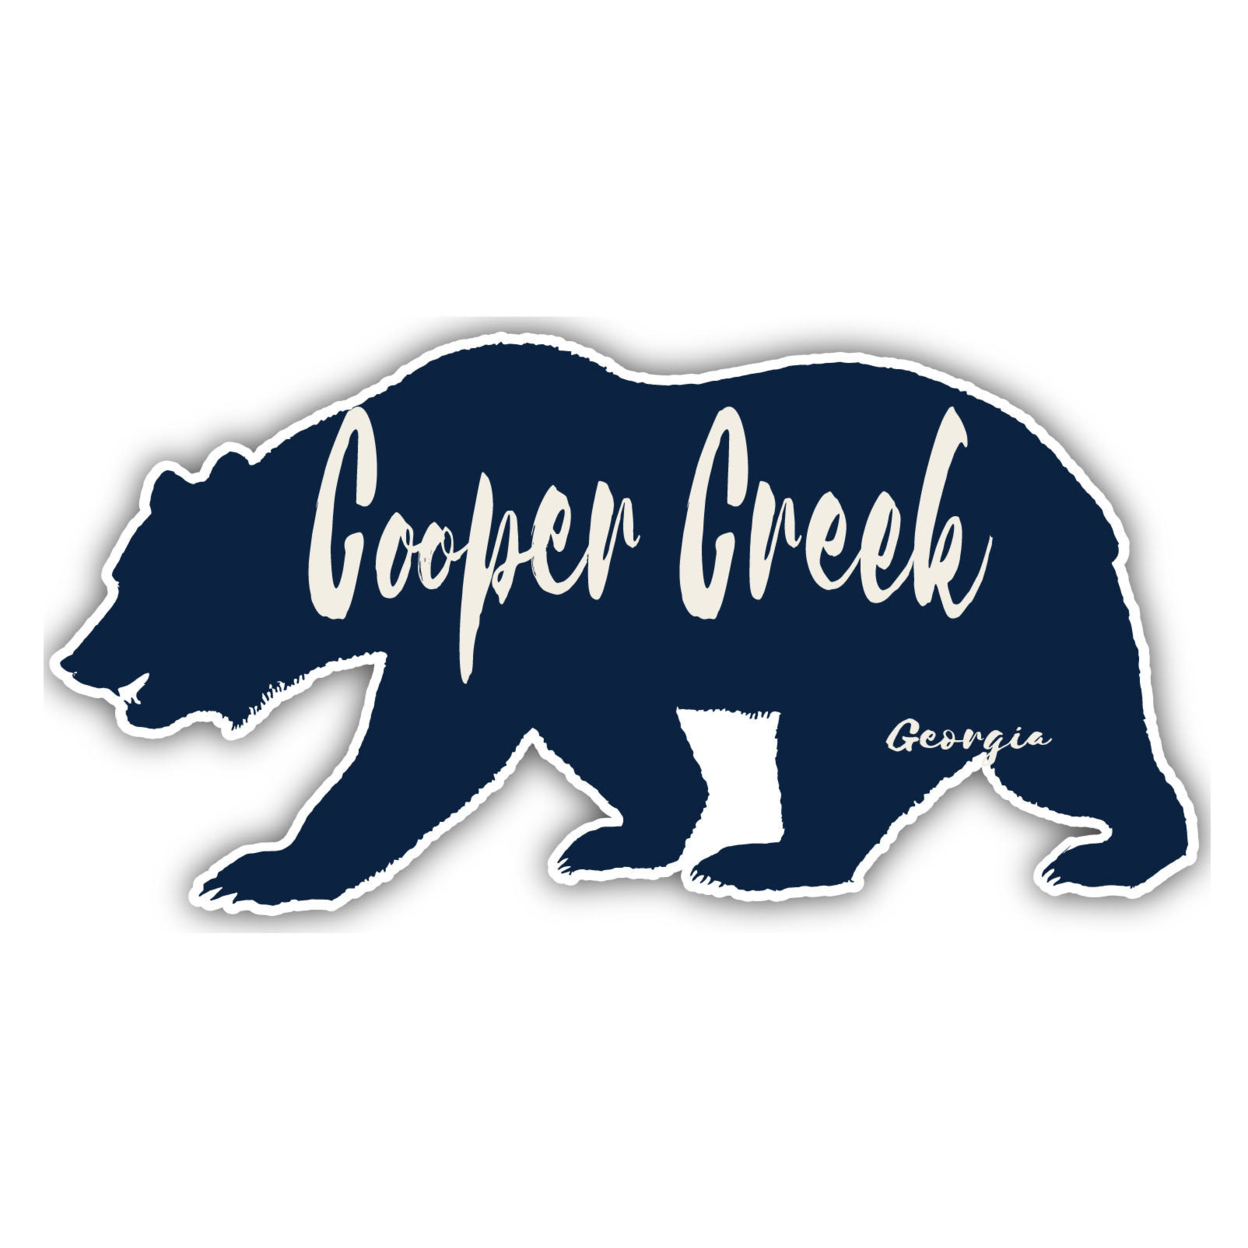 Cooper Creek Georgia Souvenir Decorative Stickers (Choose Theme And Size) - 4-Pack, 10-Inch, Bear